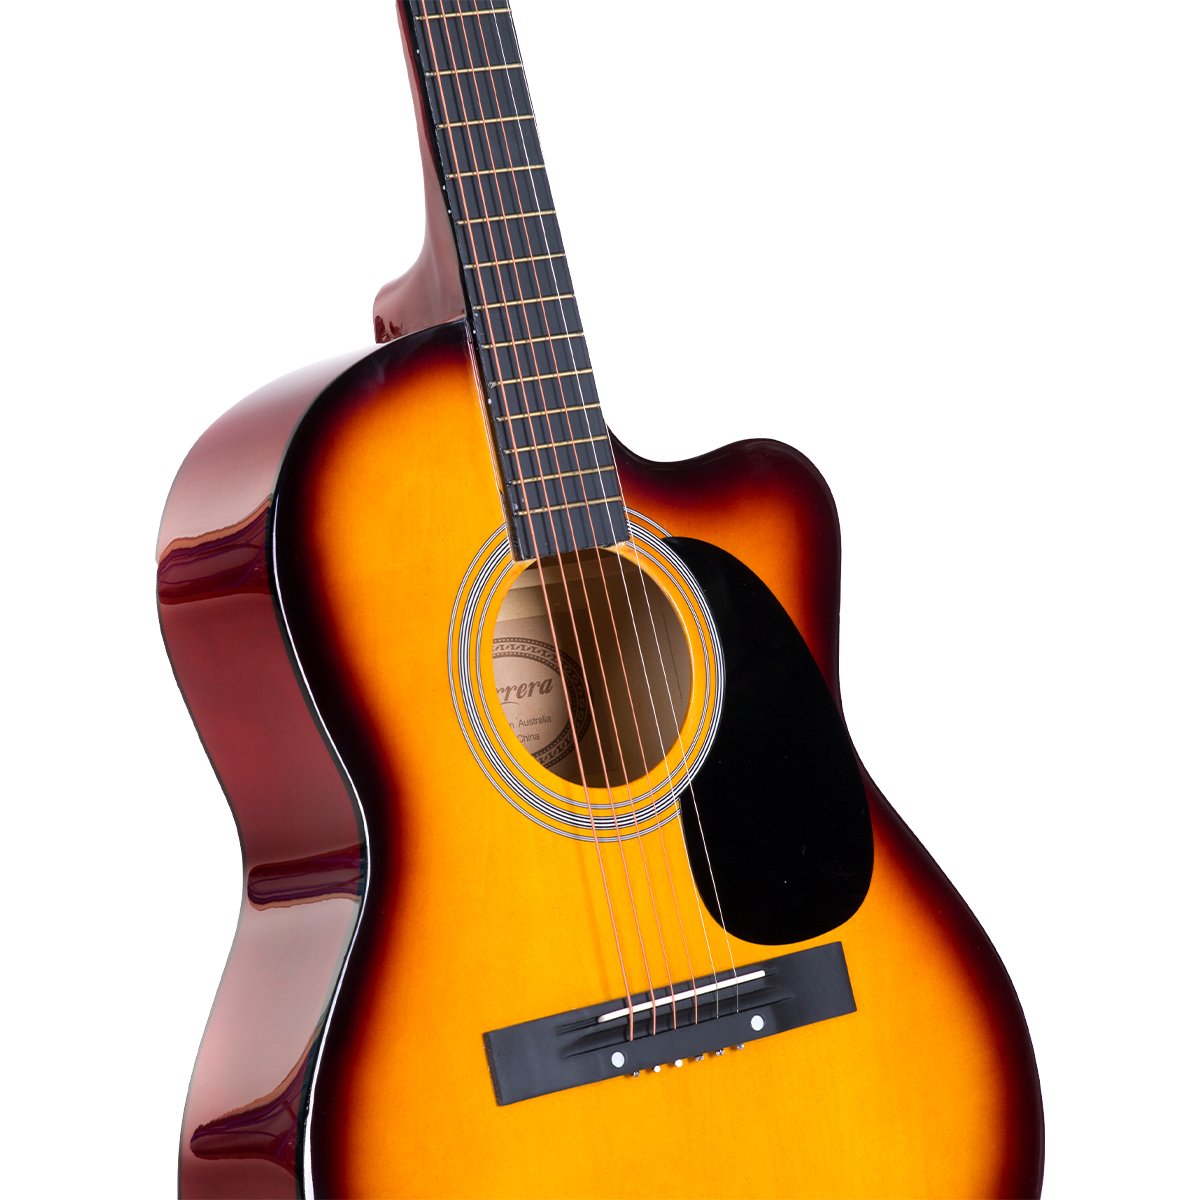 Karrera Acoustic Cutaway 40in Guitar - Sunburst